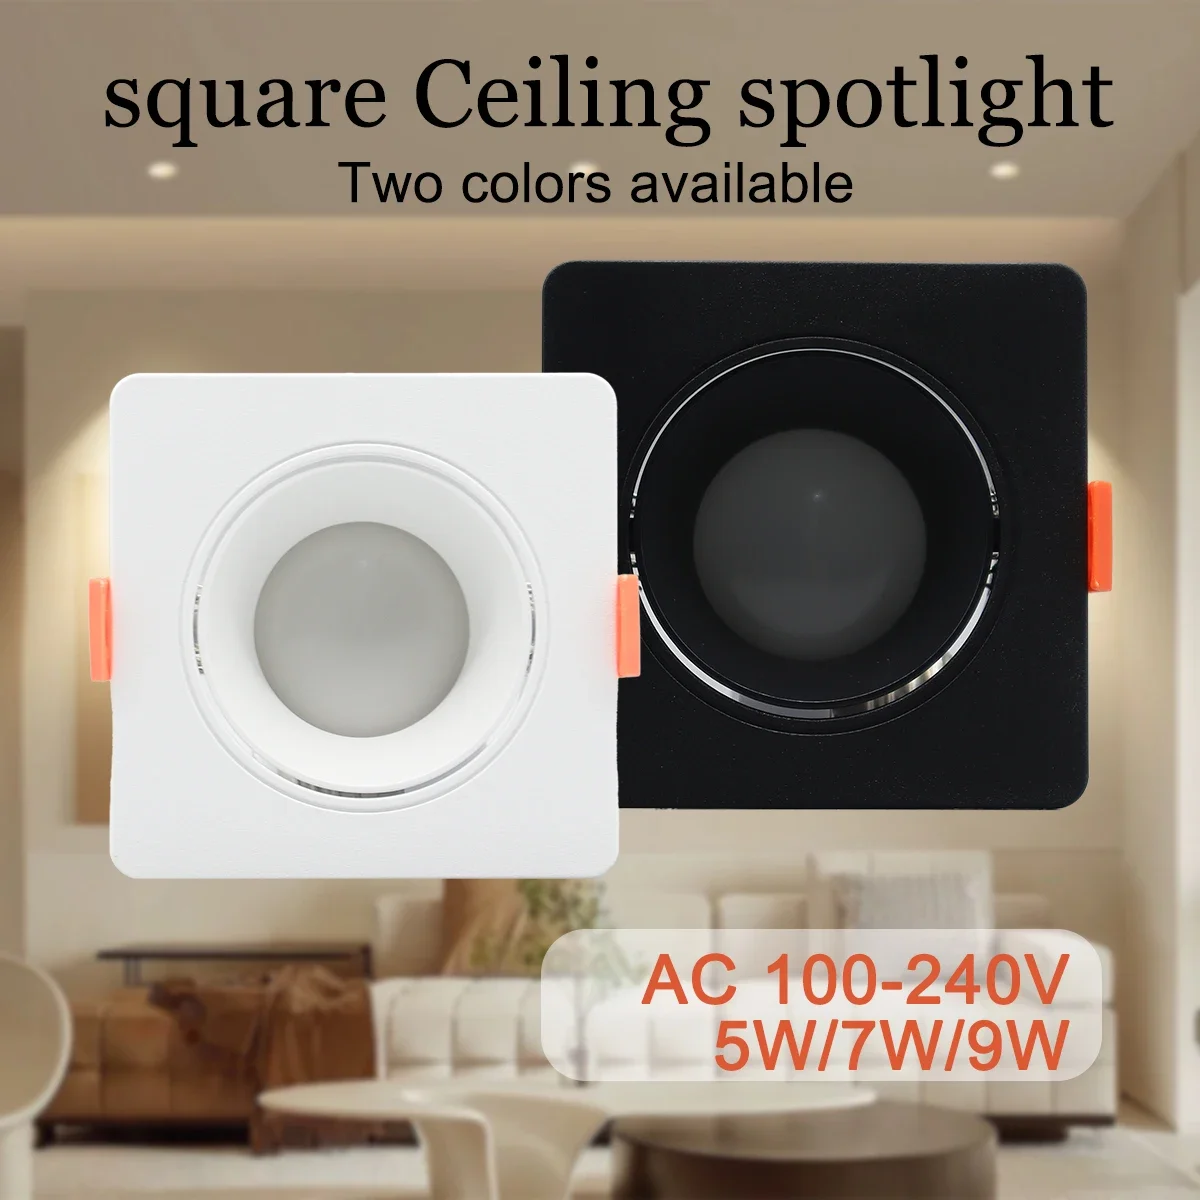 

10pcs Energy Saving Ceiling Spotlight Downlight Square LED Angle Adjustable Rotating AC220V 120V Indoor Lighting White Color